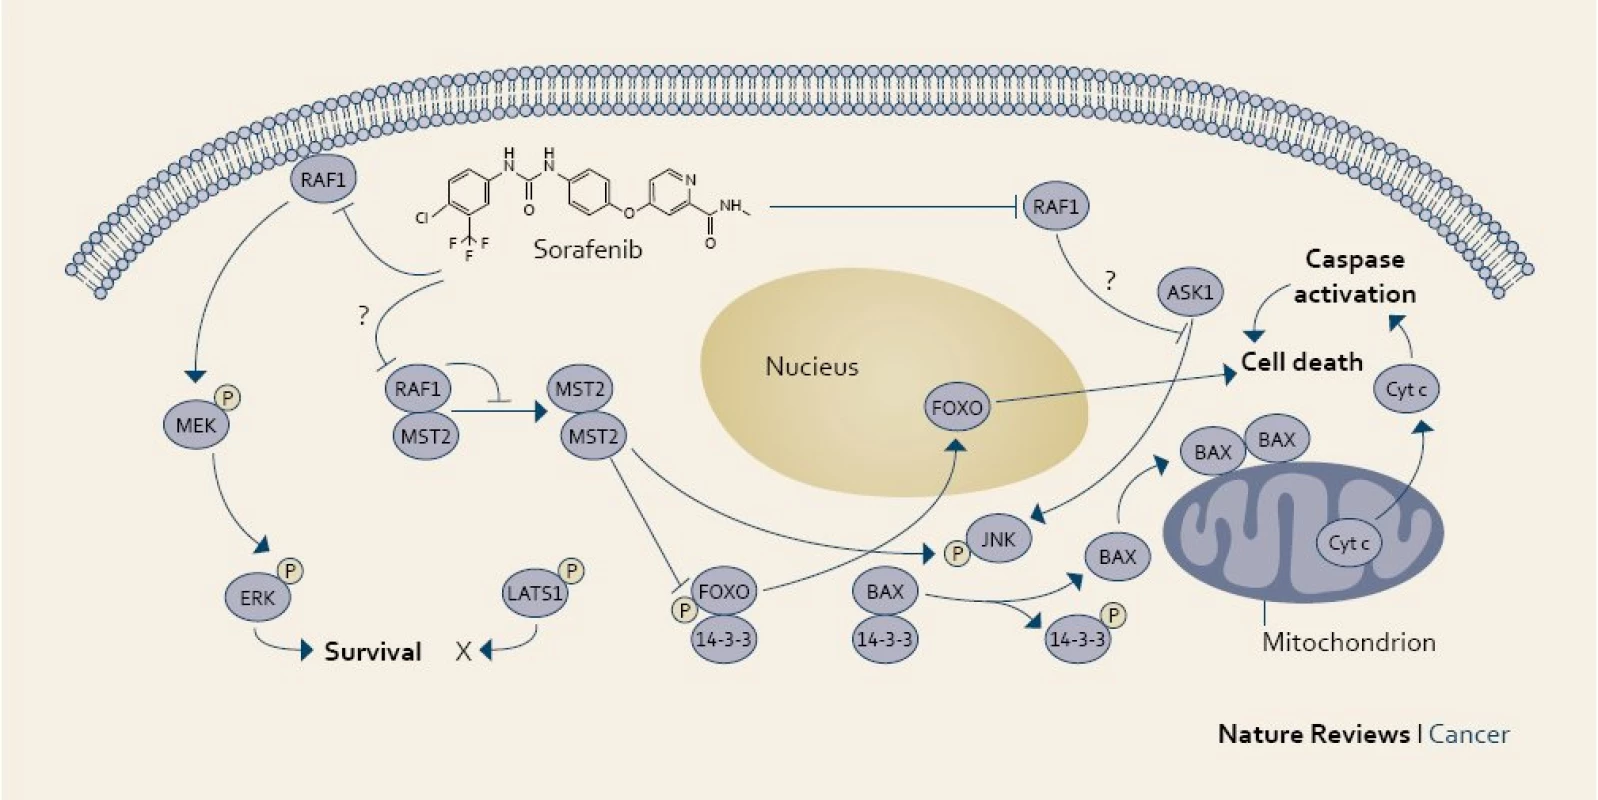 Účinek sorafenibu v nádorové buňce.
Fig. 1. The mechanism of action of sorafenib in a cancer cell.